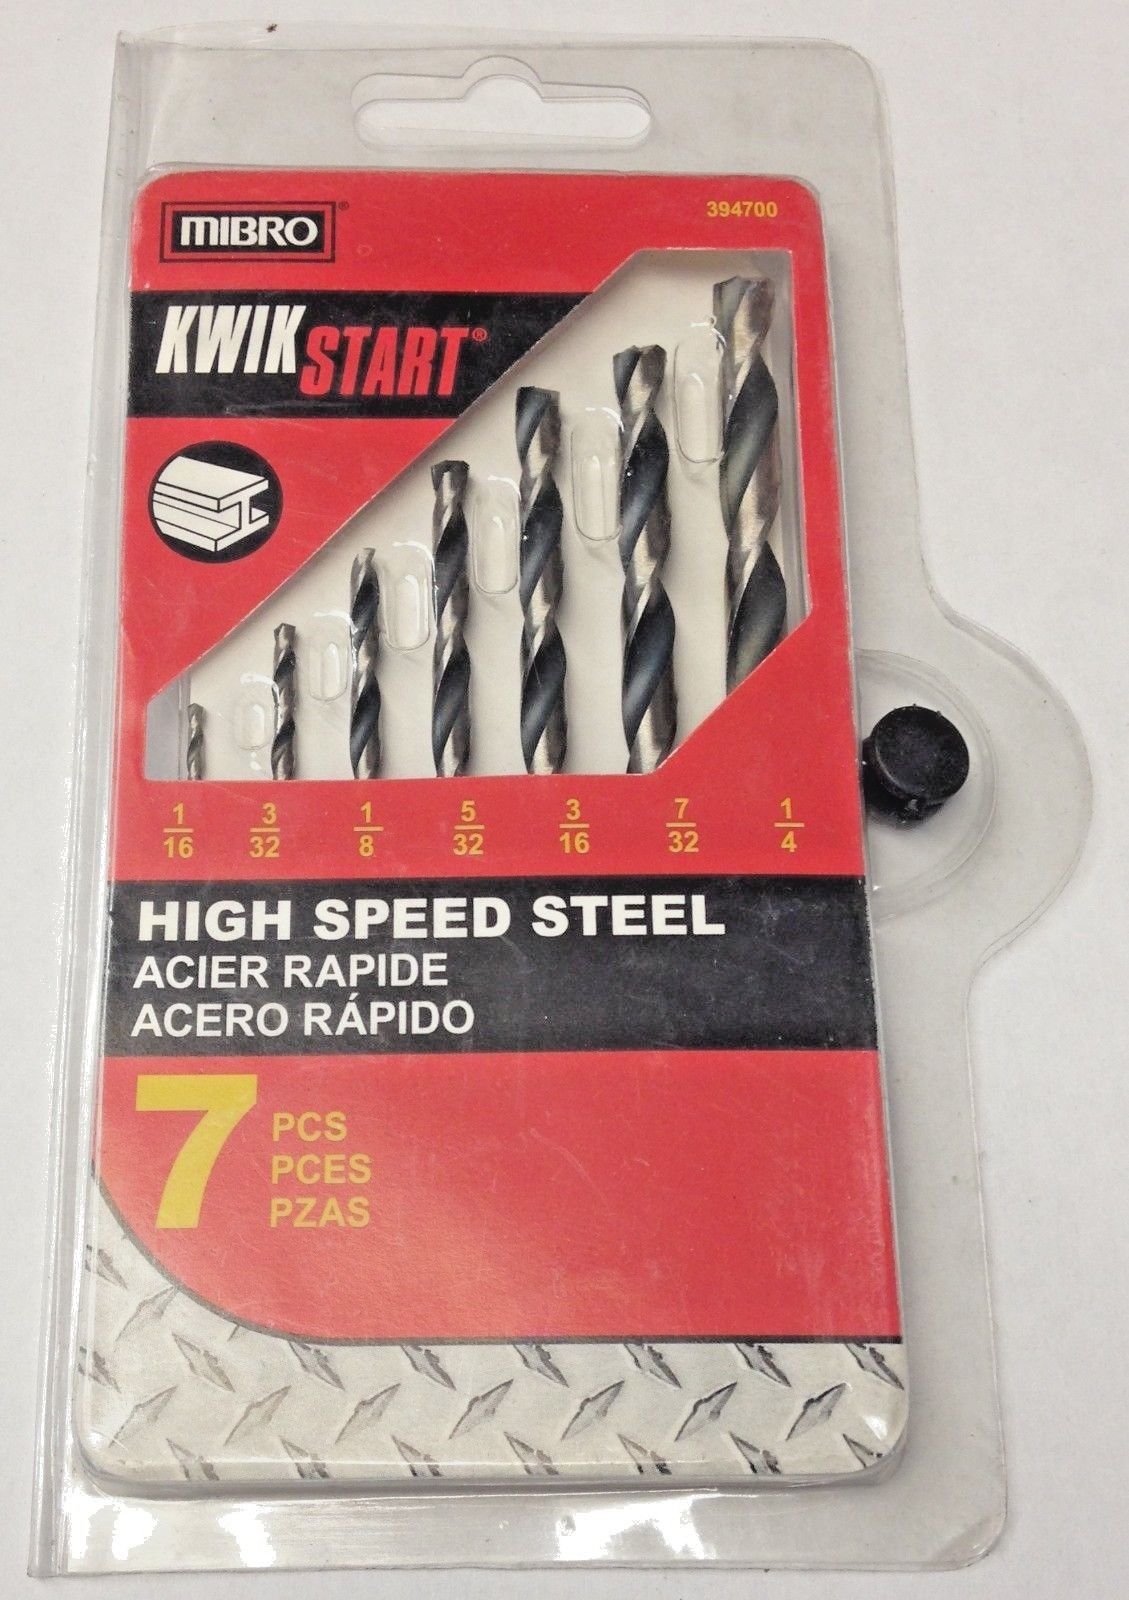 Mibro 394700 7 Piece Kwik Start High Speed Steel Drill Bit Set 1/16" - 1/4"